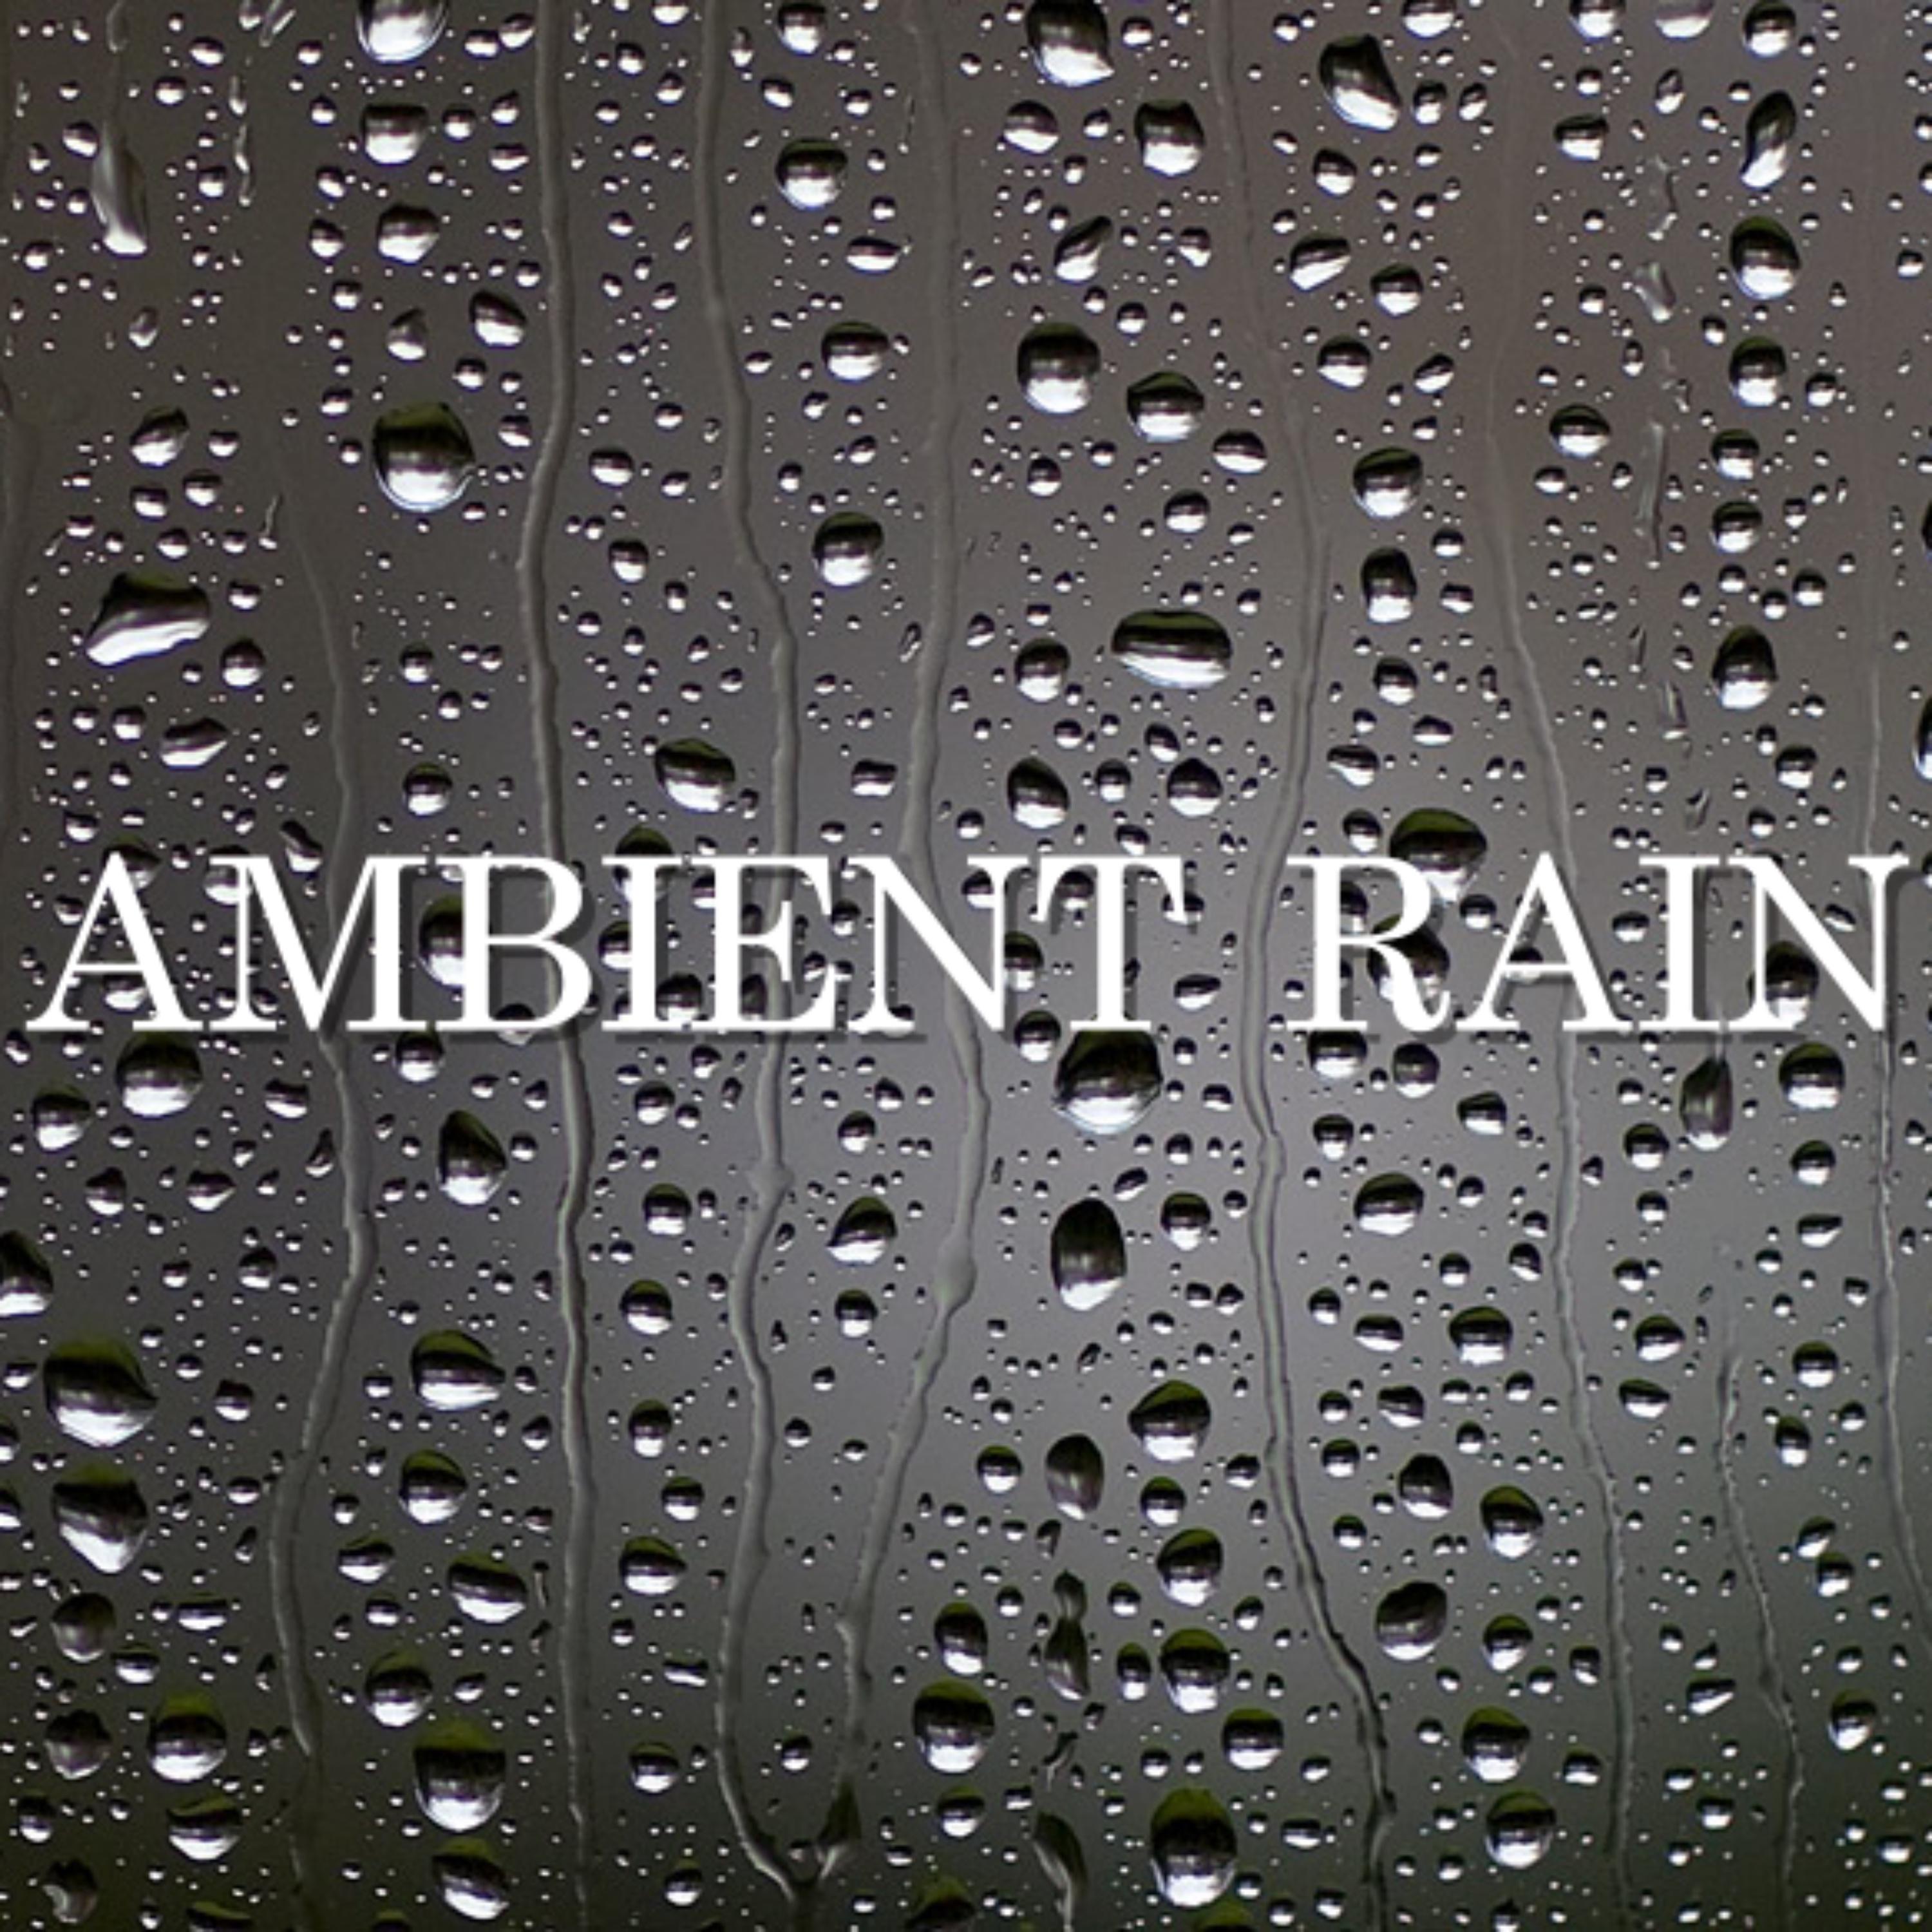 Ambient Rain